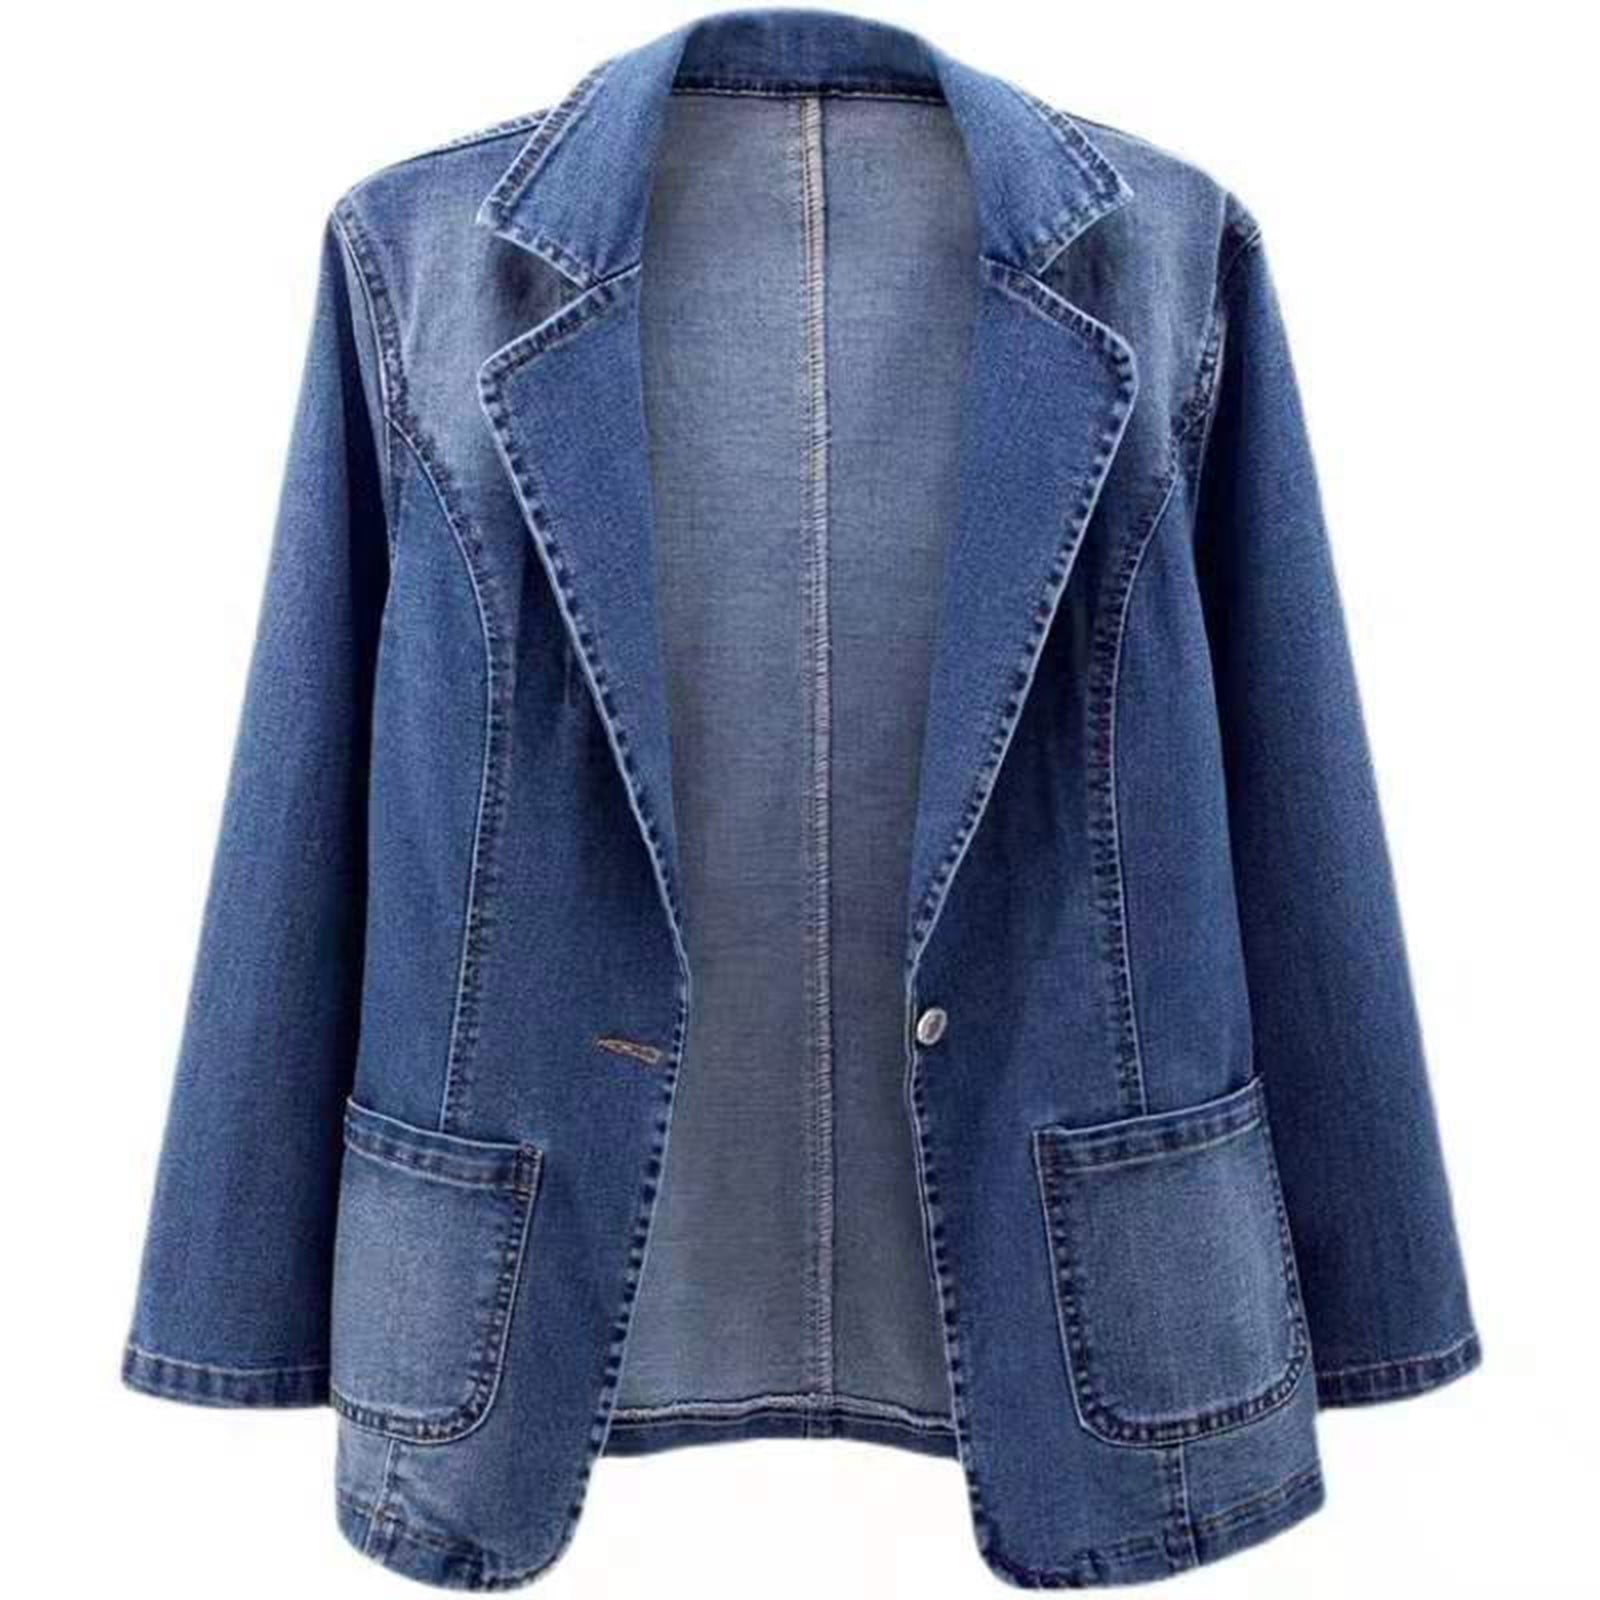 Buy jiejiegao Women's Casual Slim Fit One Button Denim Blazer Short Jacket  Coat 1 XL at Amazon.in